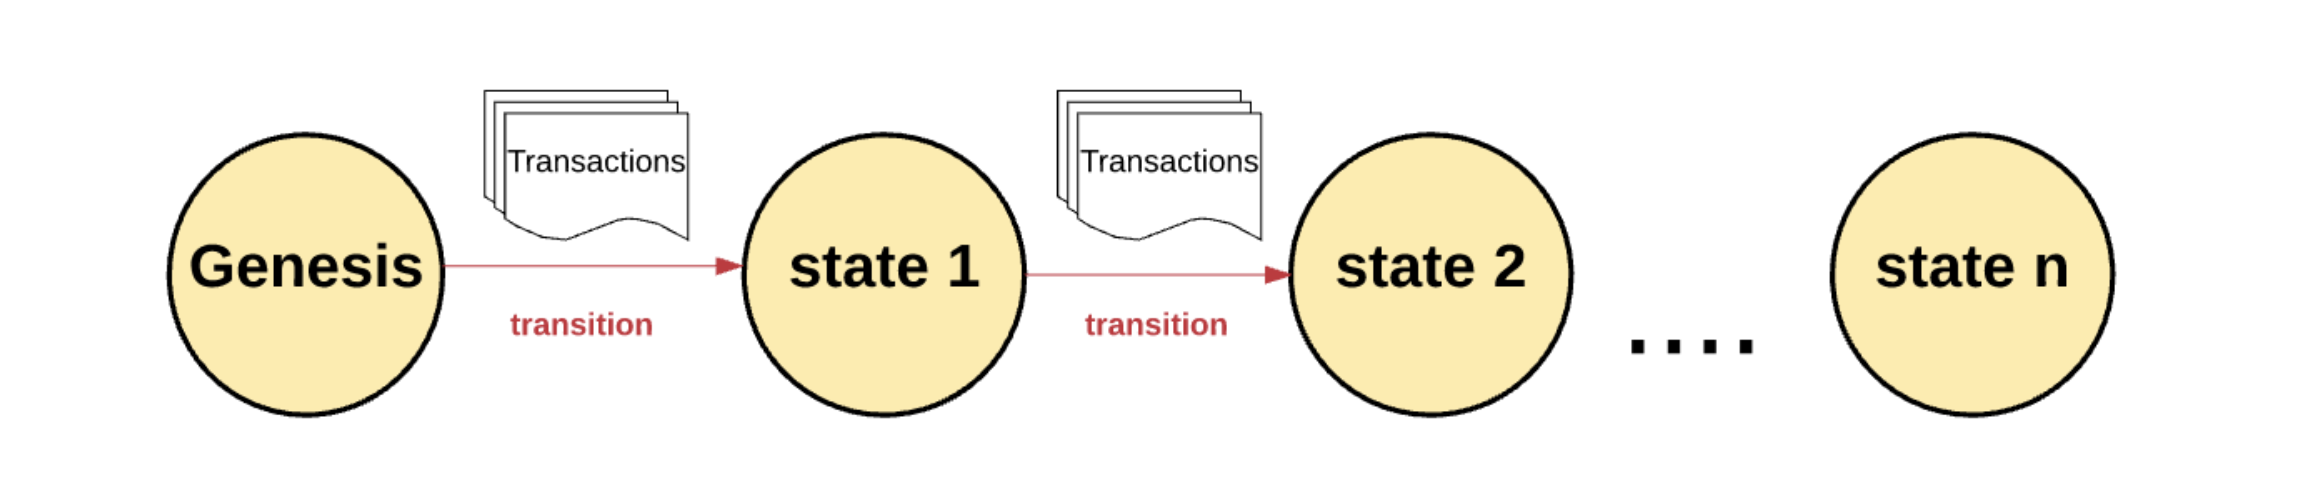 Transactions grouped into Blocks